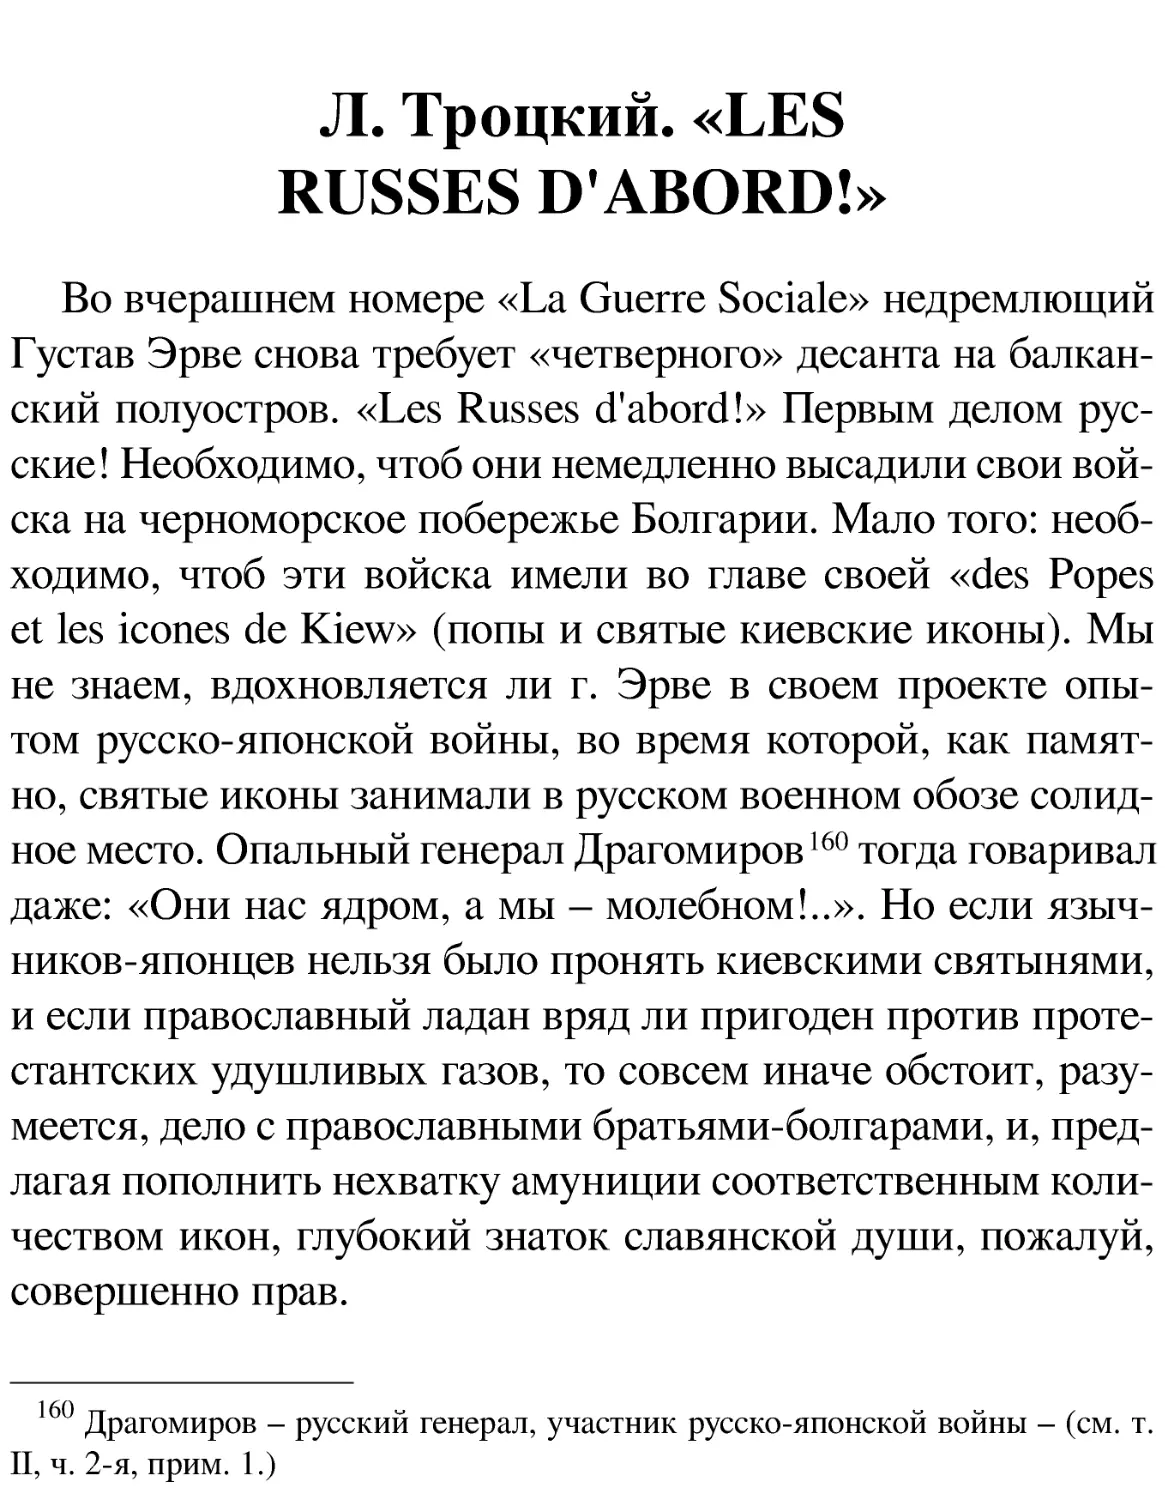 Л. Троцкий. «LES RUSSES D'ABORD!»